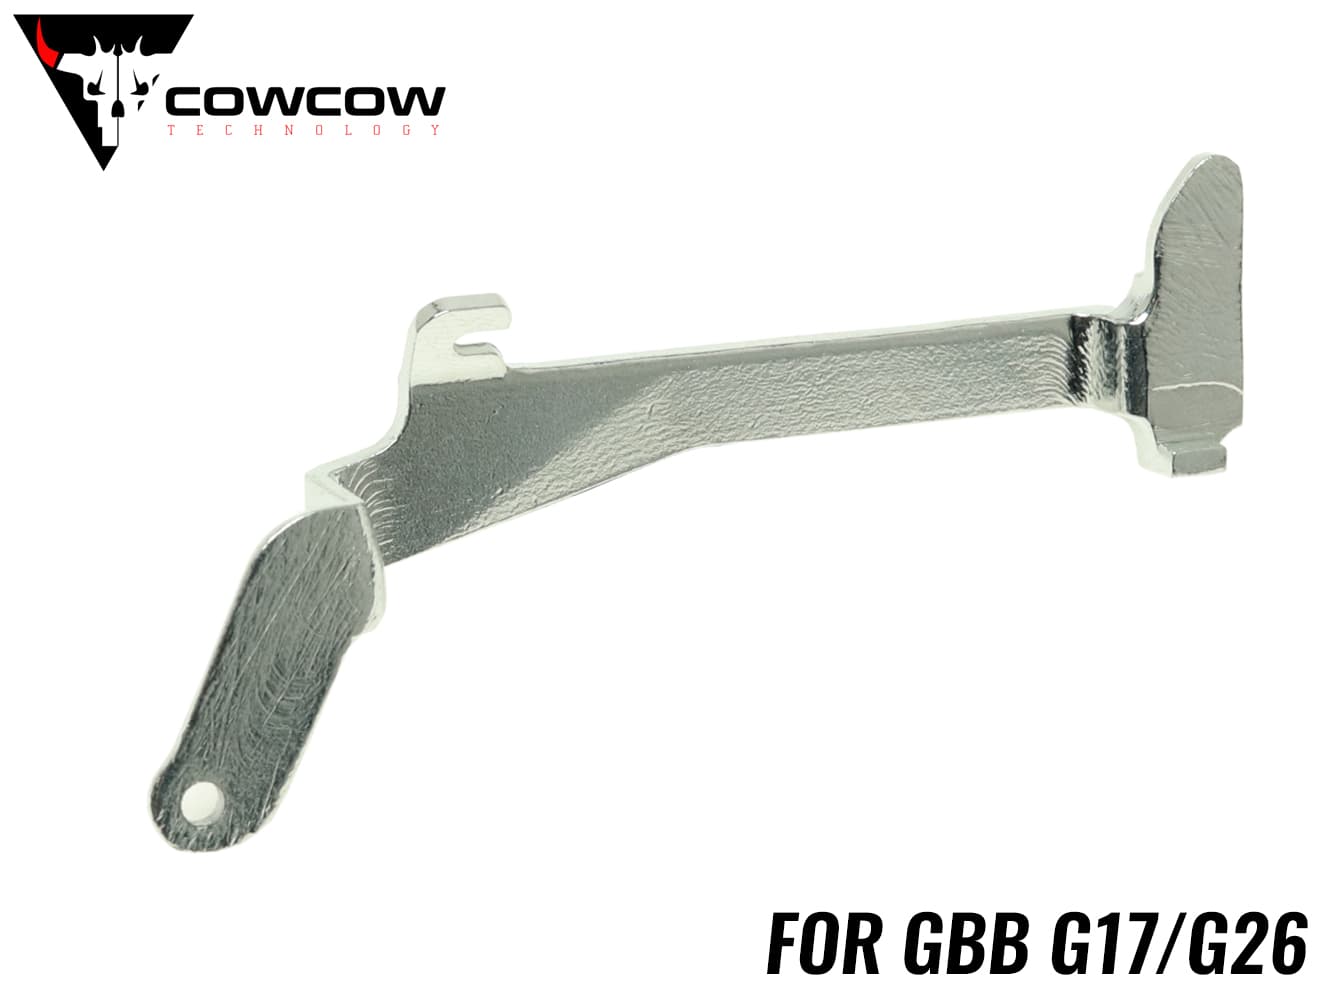 CCT-TMG-007　COWCOW TECHNOLOGY ハイカーボンスチール CNCトリガーバー G19